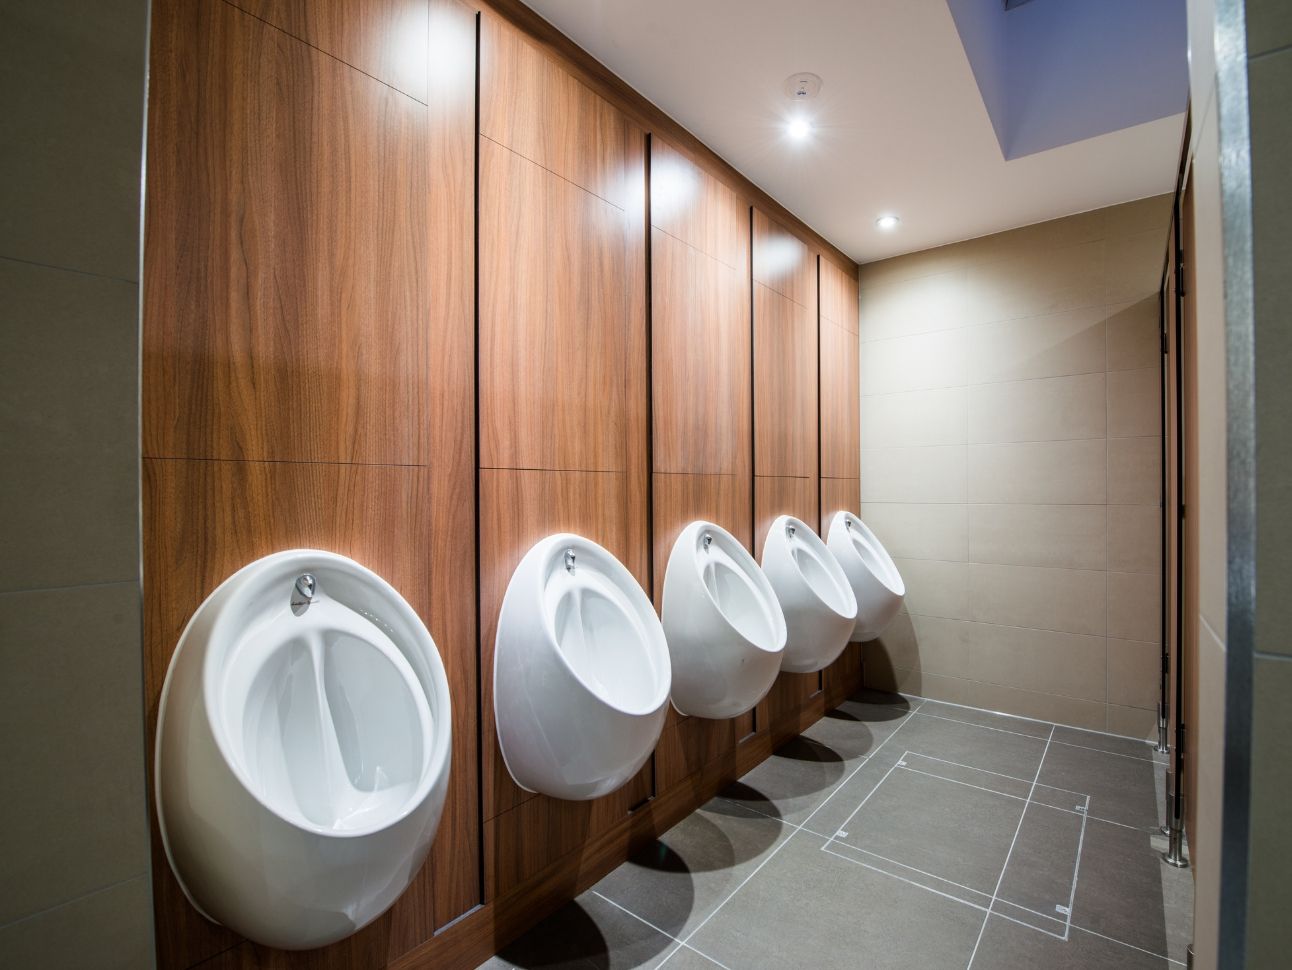 Concealed cistern urinals